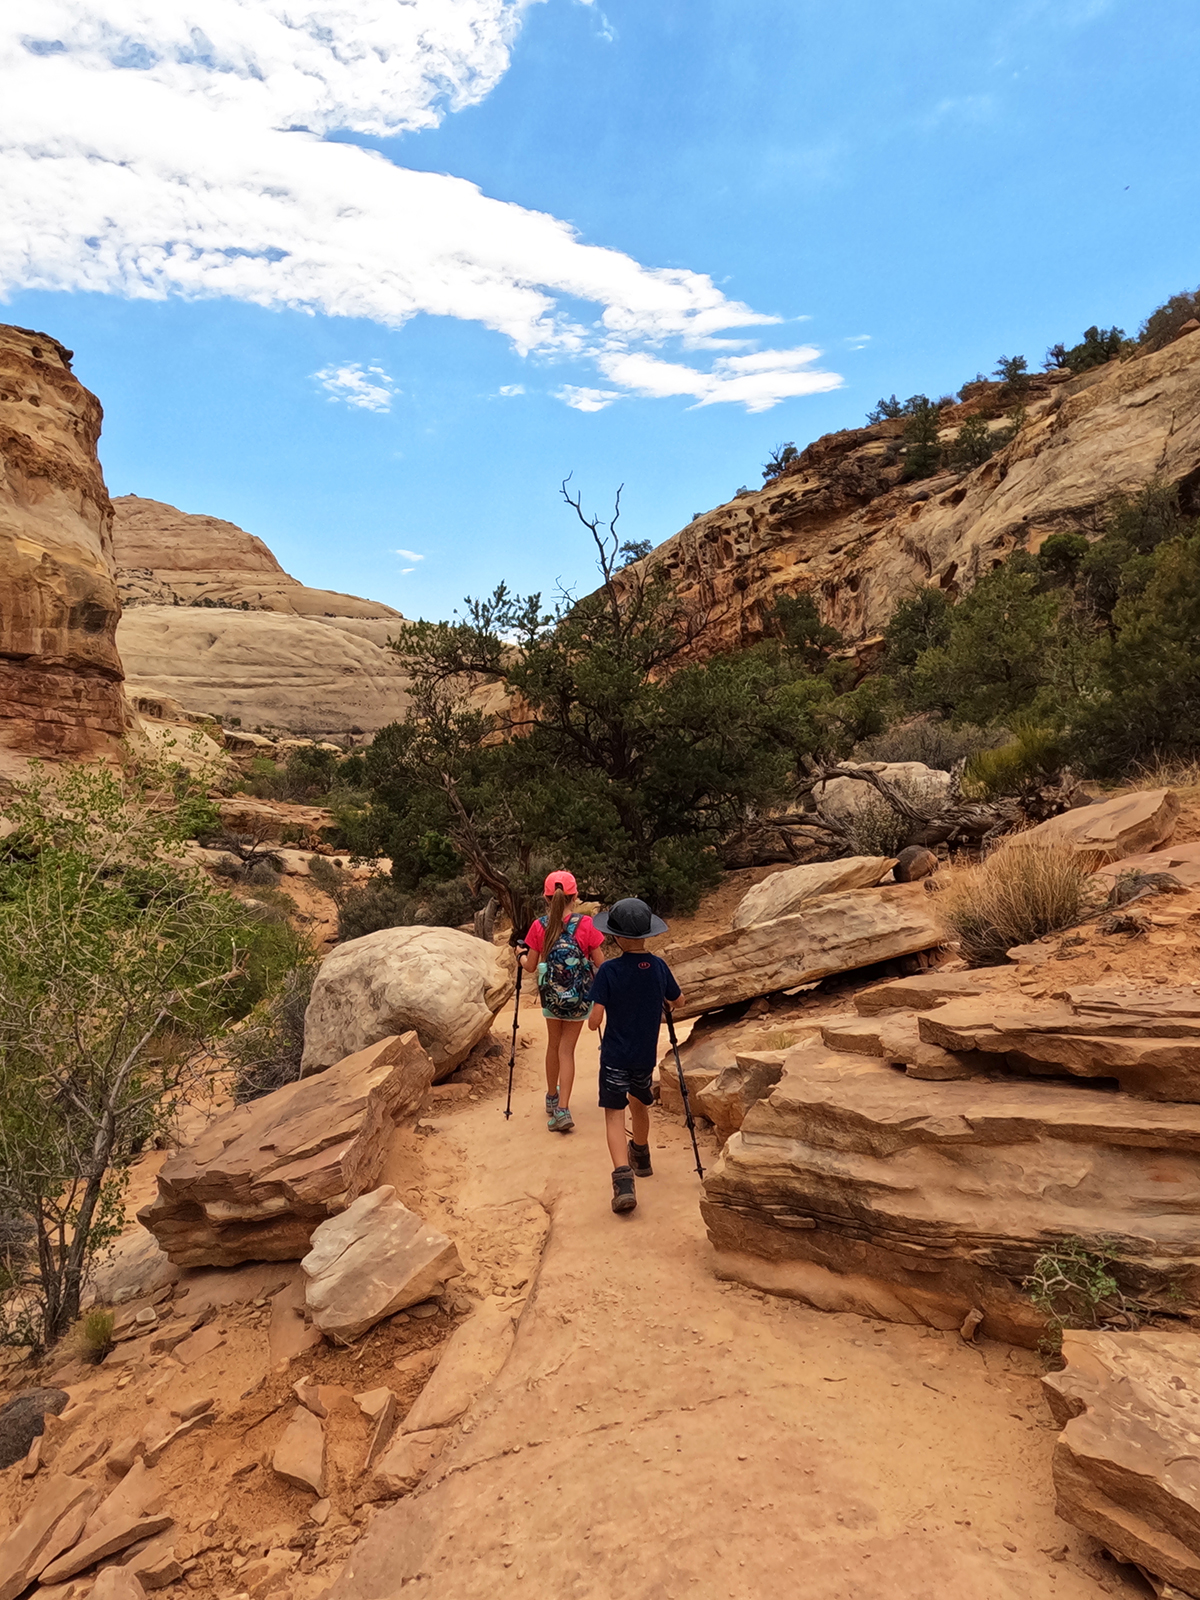 view of two kids hiking hickman bridge trail through rocky terrain